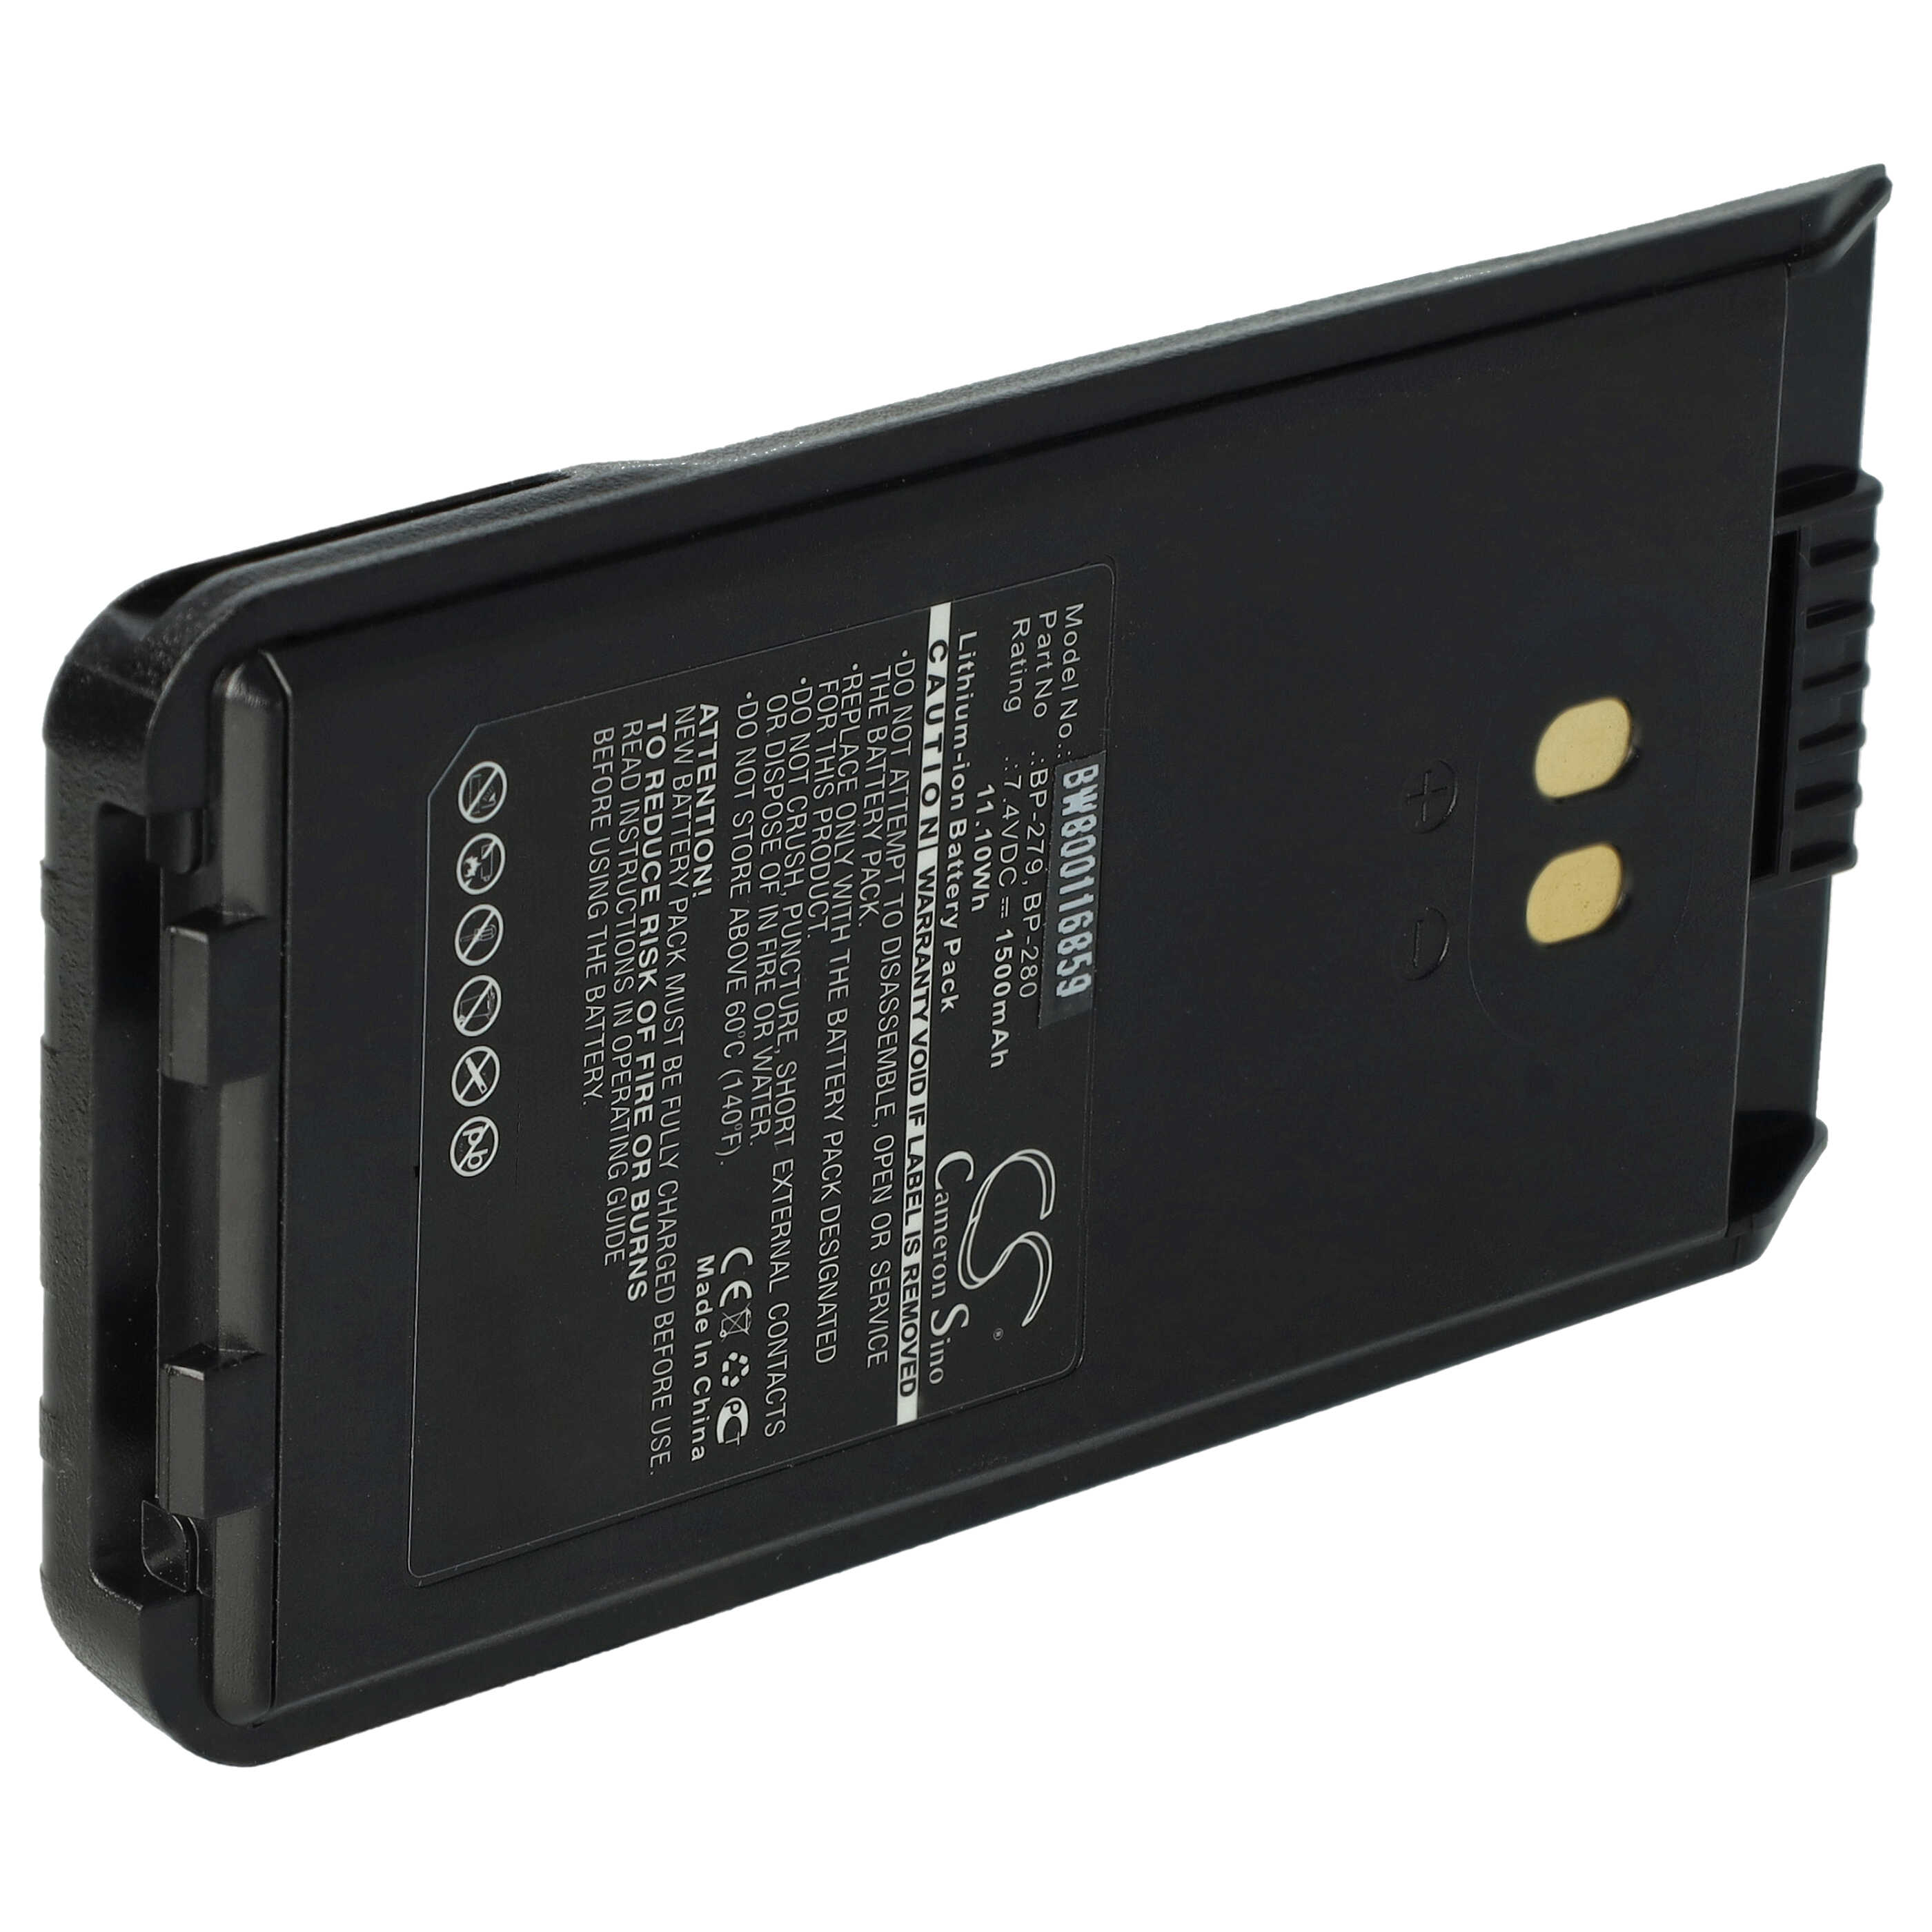 Radio Battery Replacement for Icom BP-279, BP-280, BP-280LI - 1500mAh 7.4V Li-Ion + Belt Clip